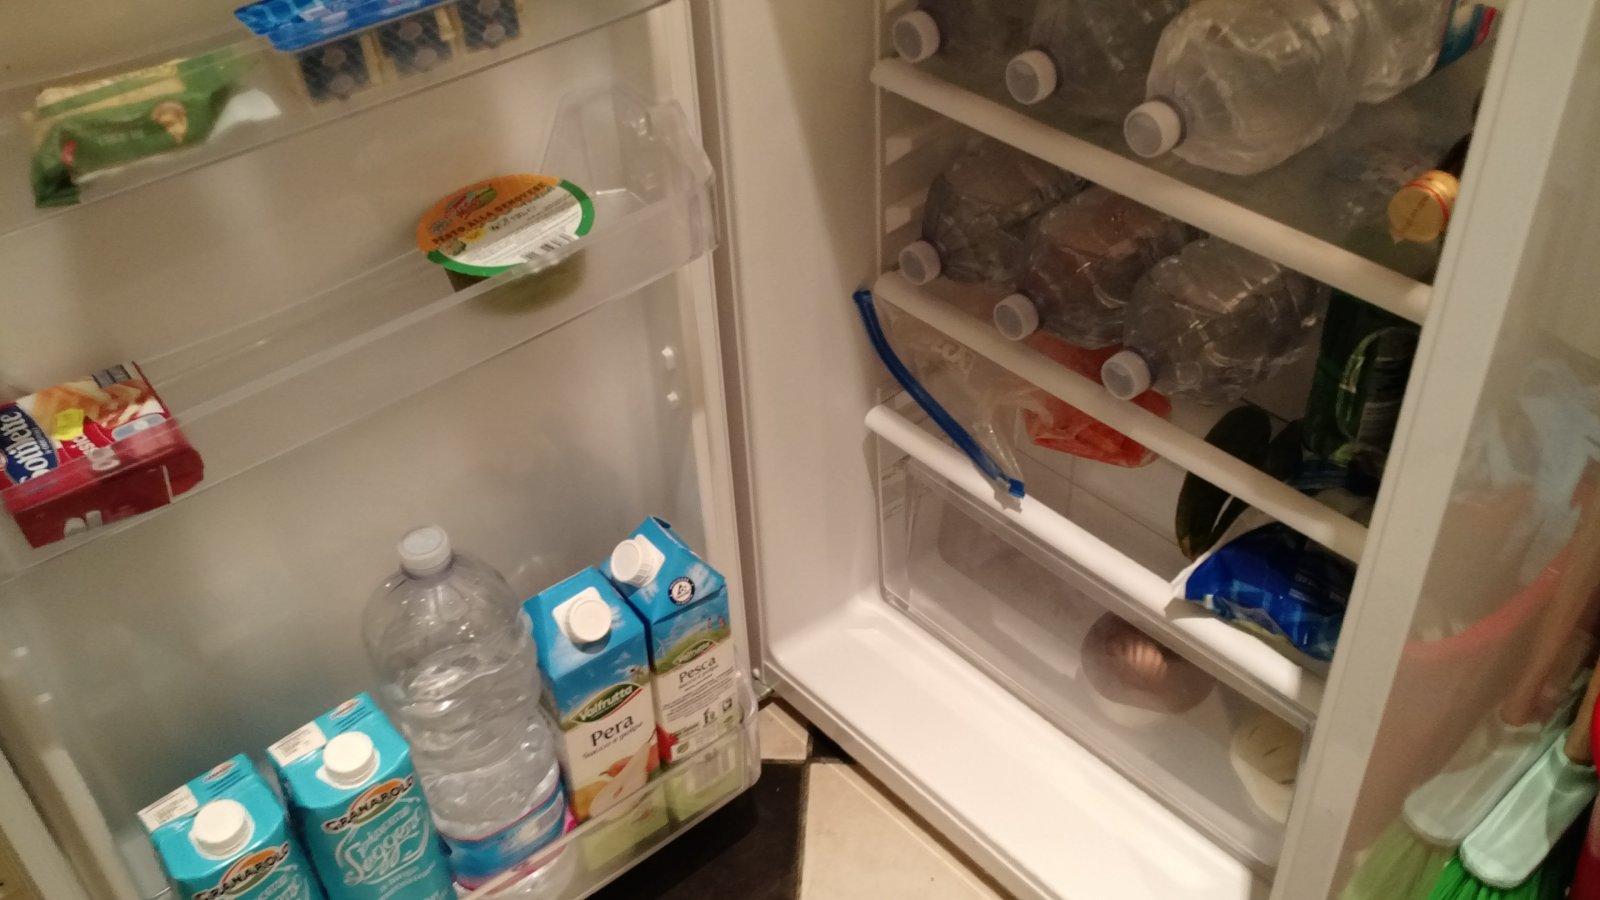 They stocked the fridge.